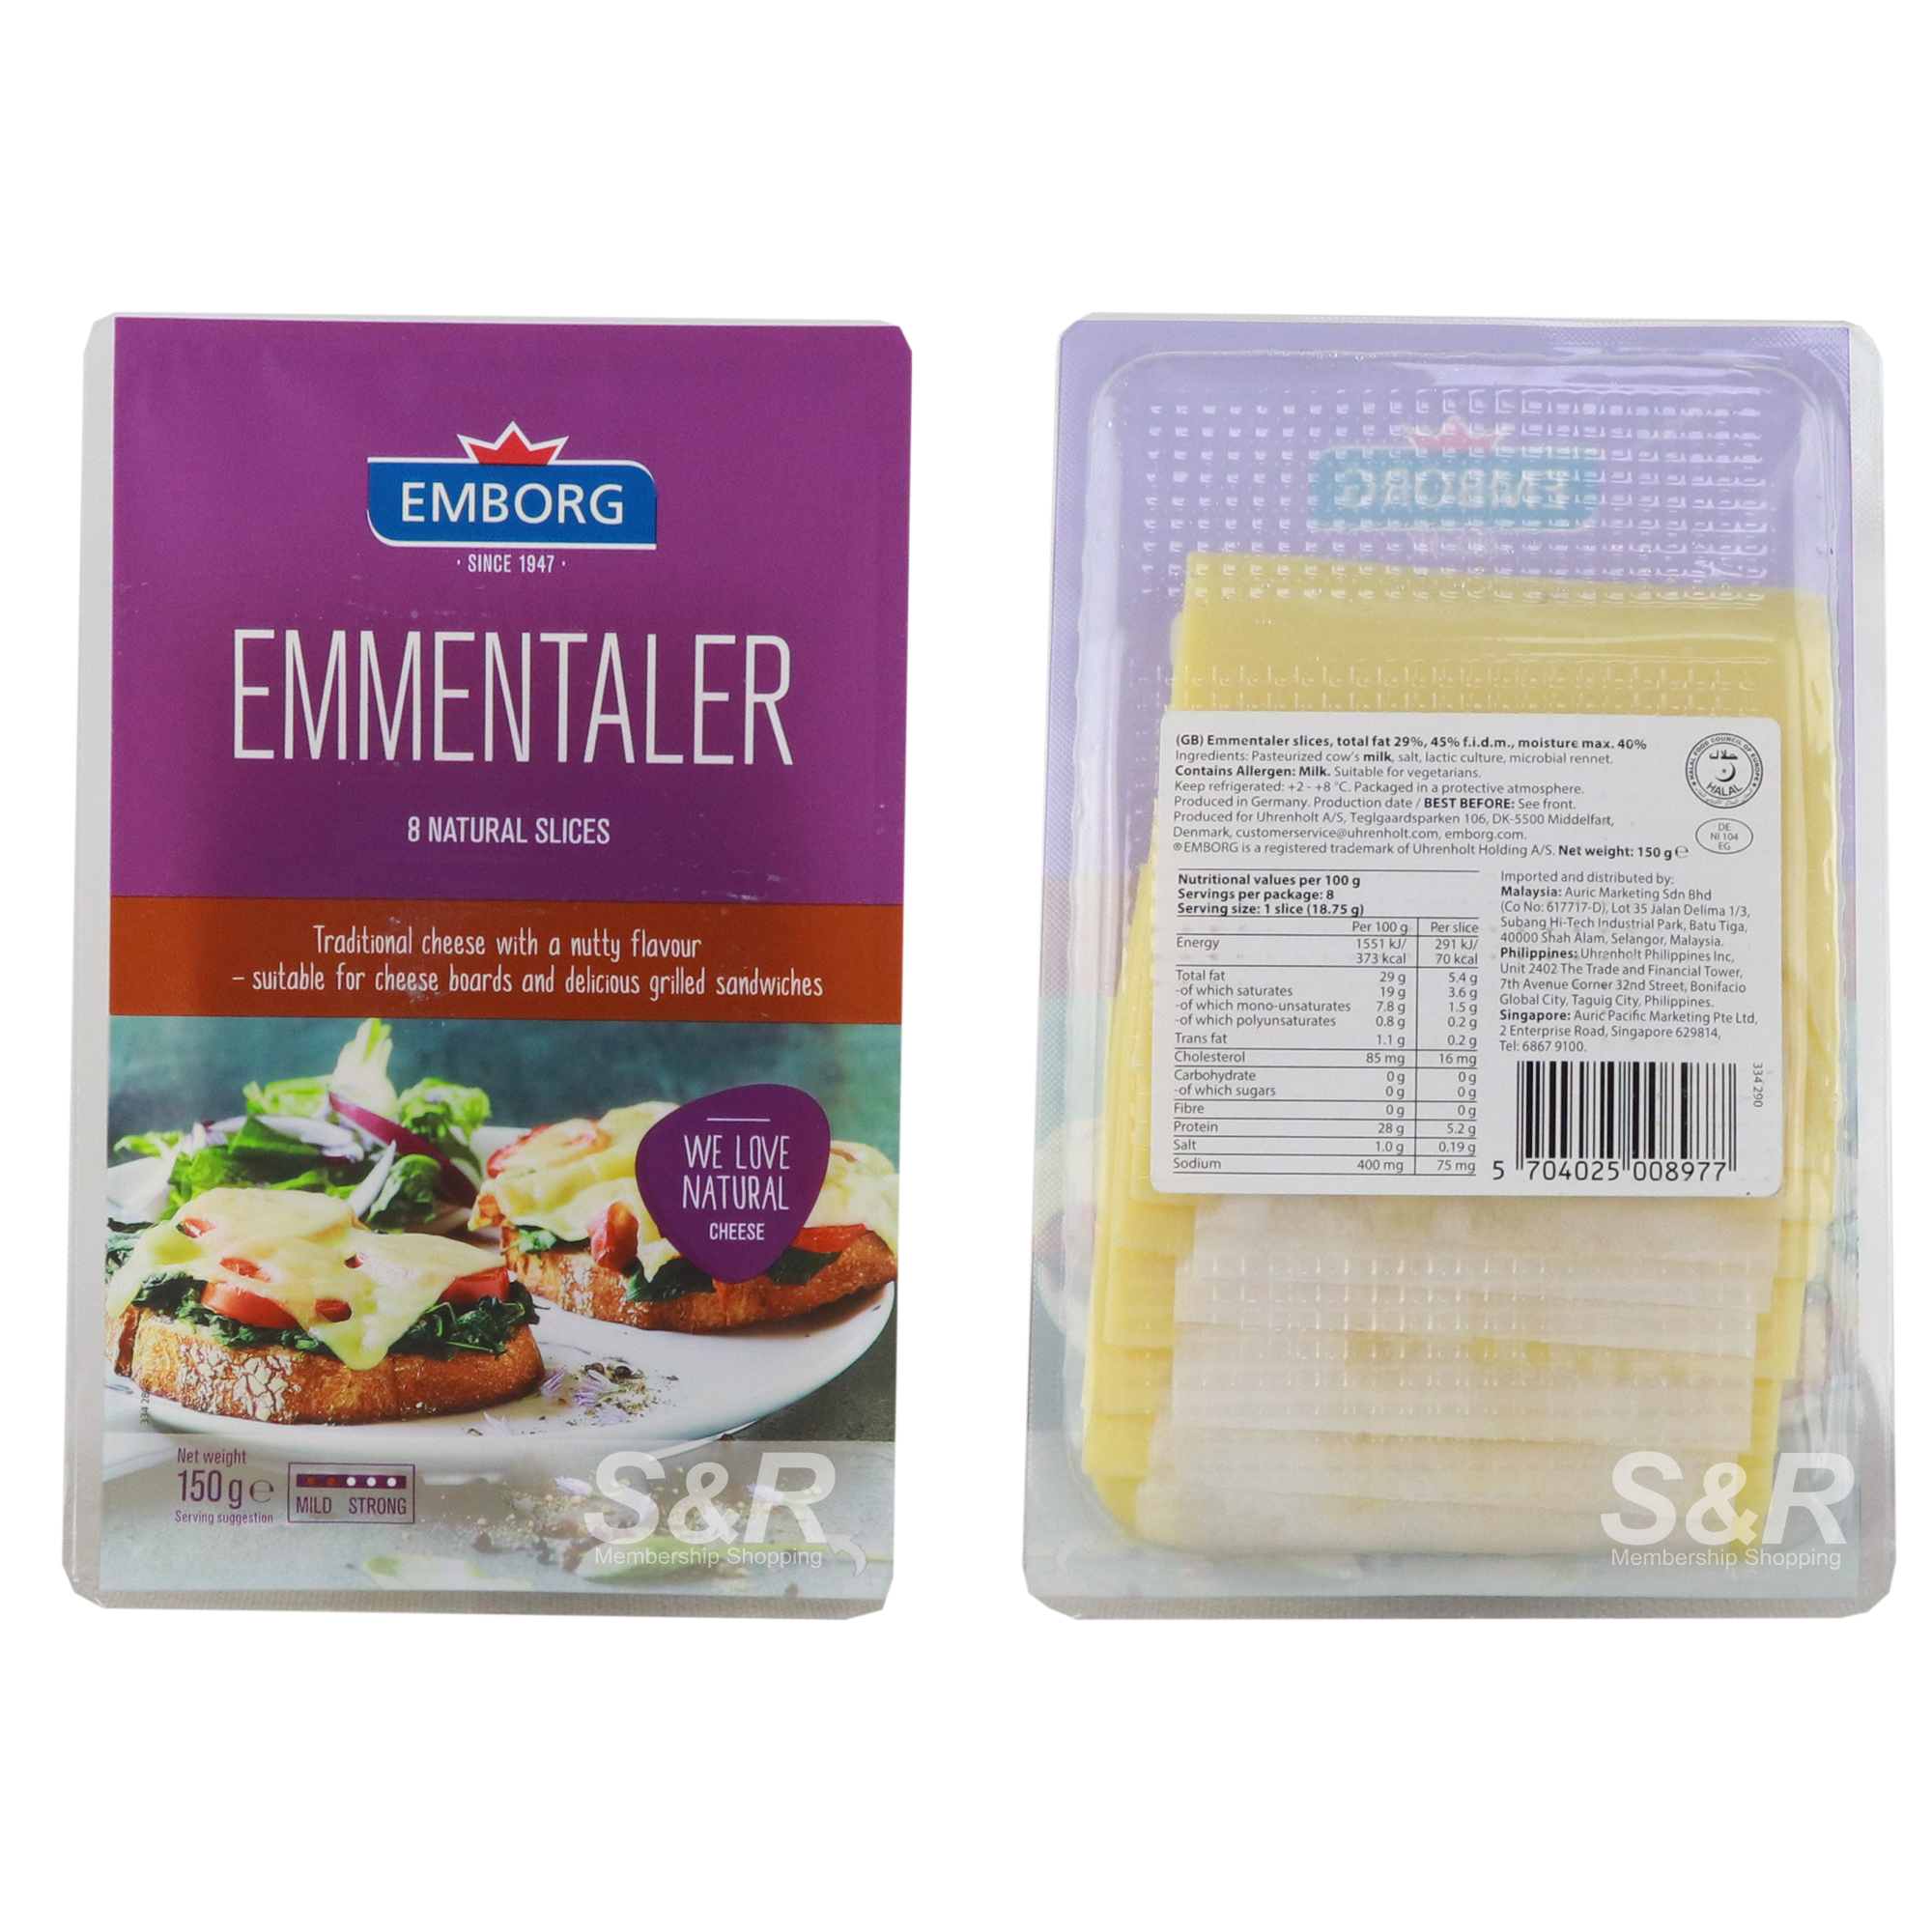 Emmentaler Cheese Slices